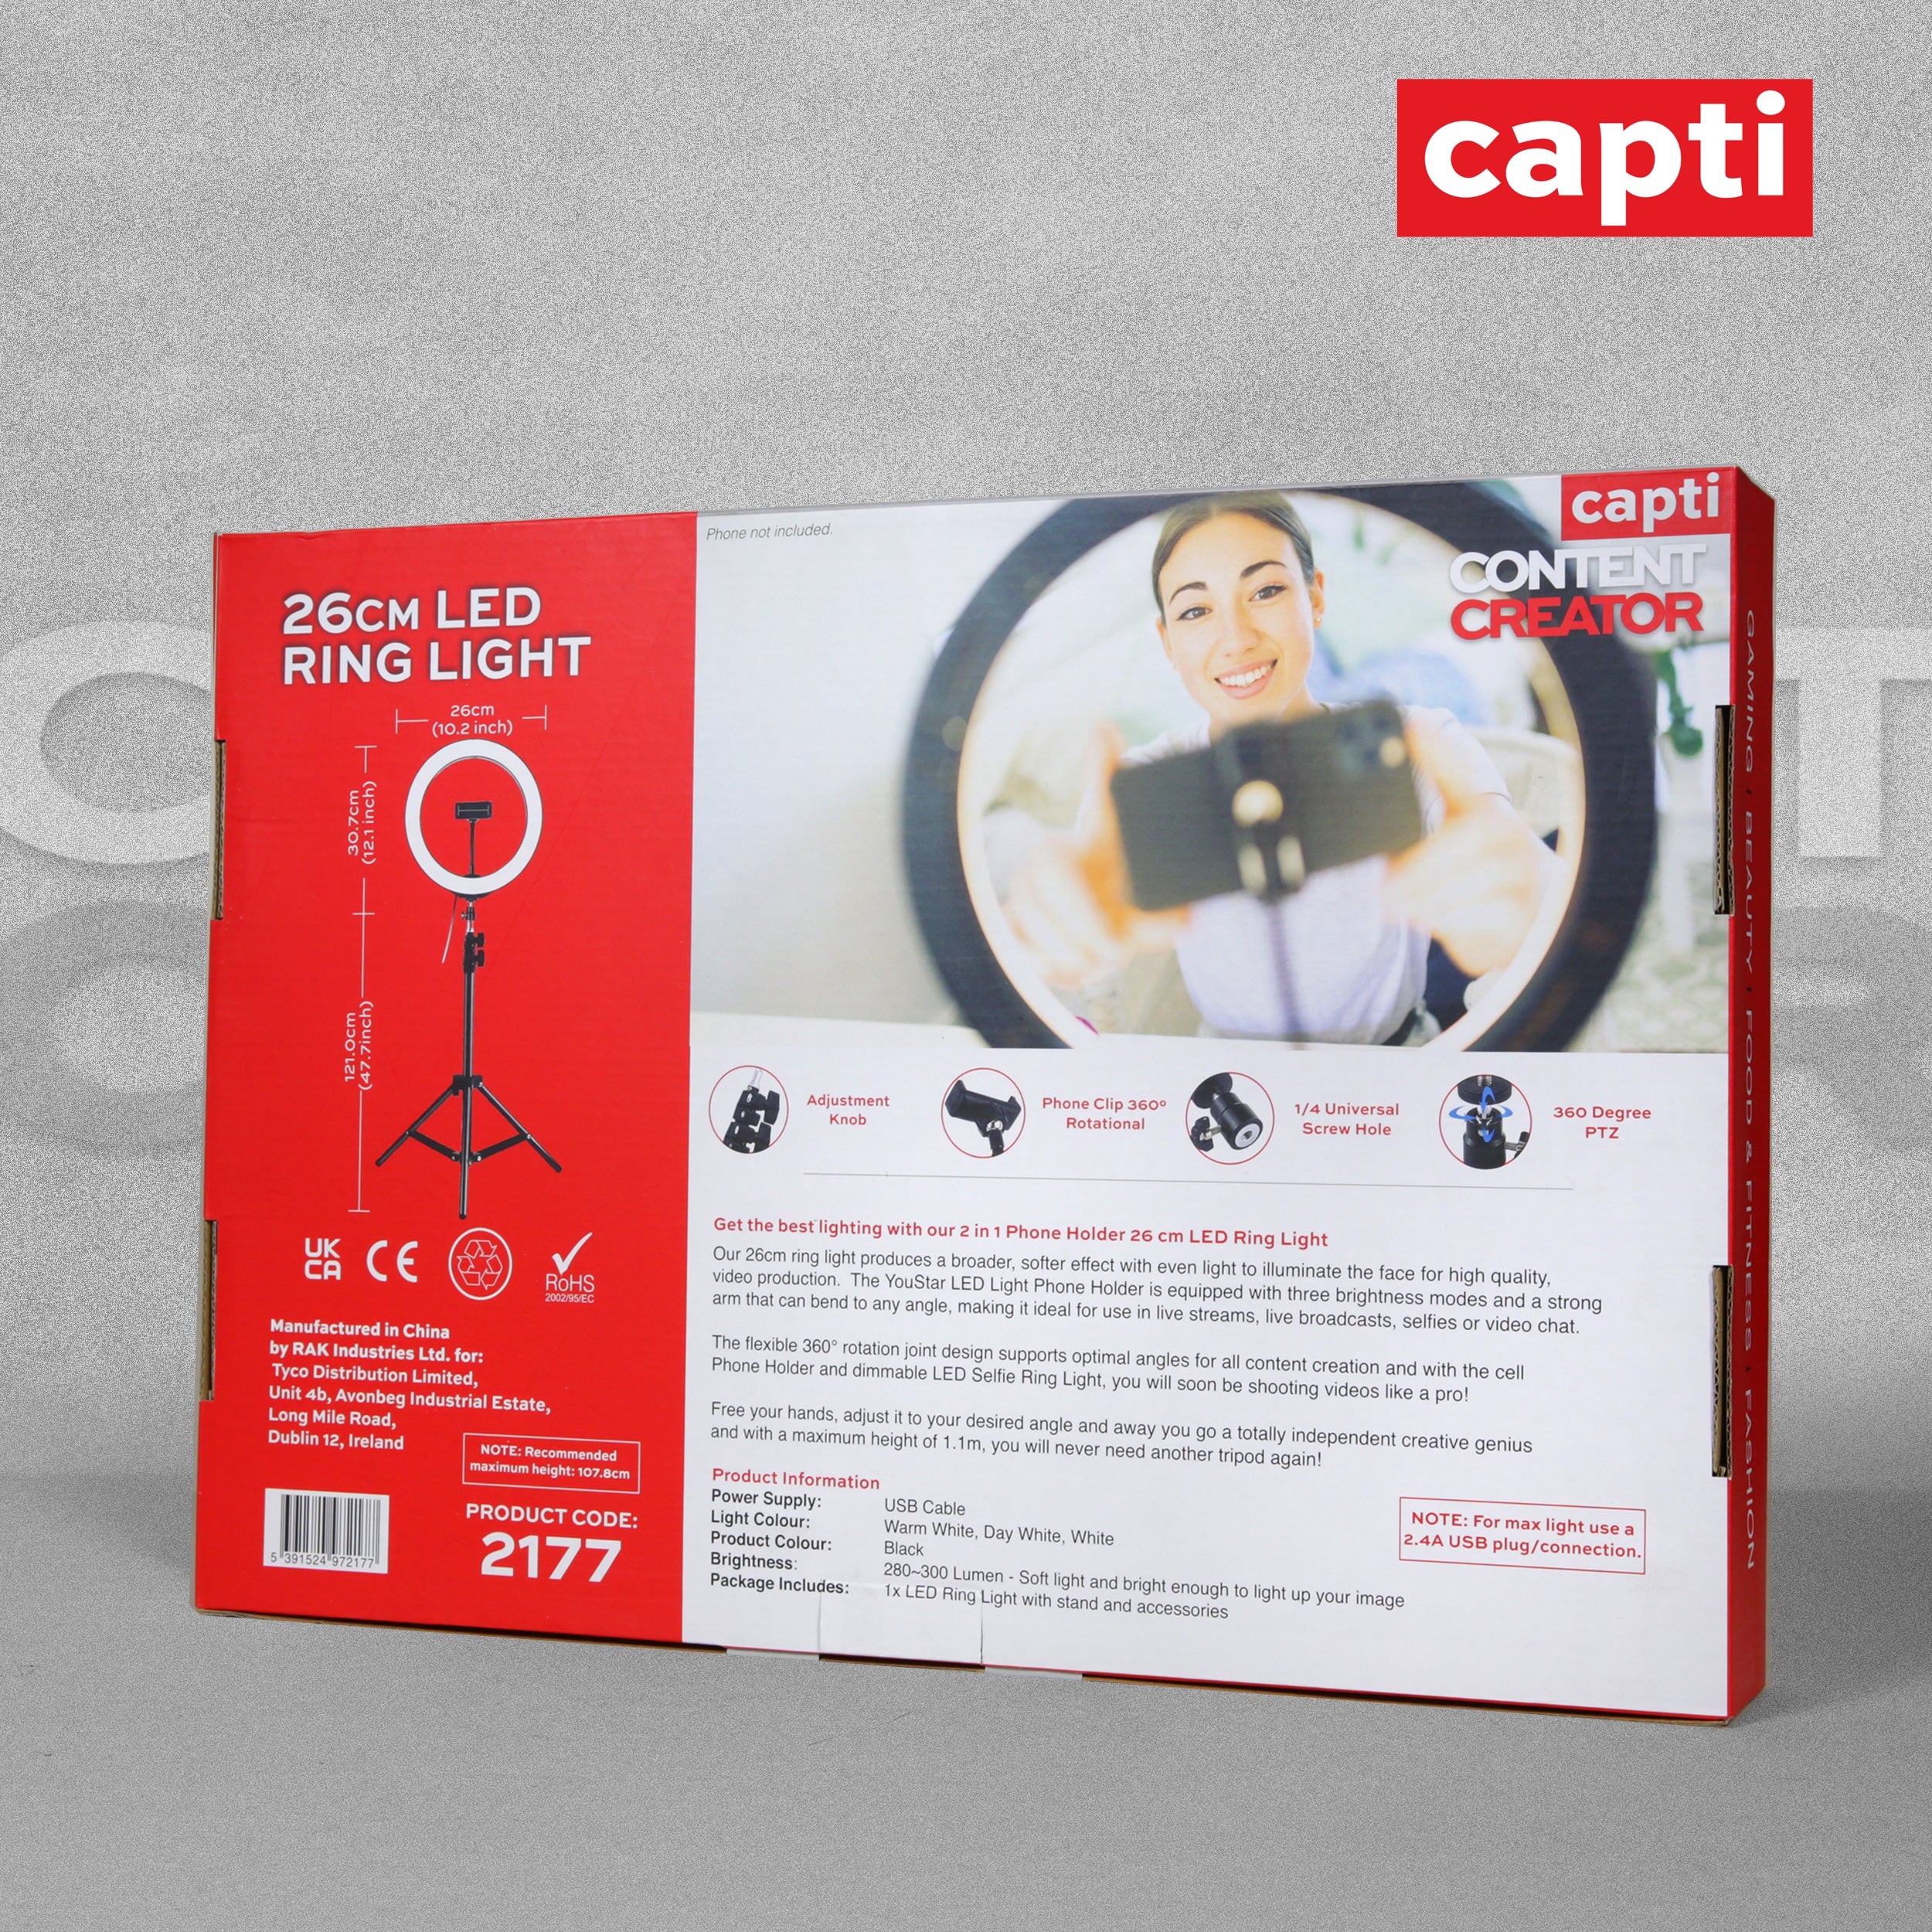 Capti 26cm LED Ring Light & 150cm Tripod for Content Creators